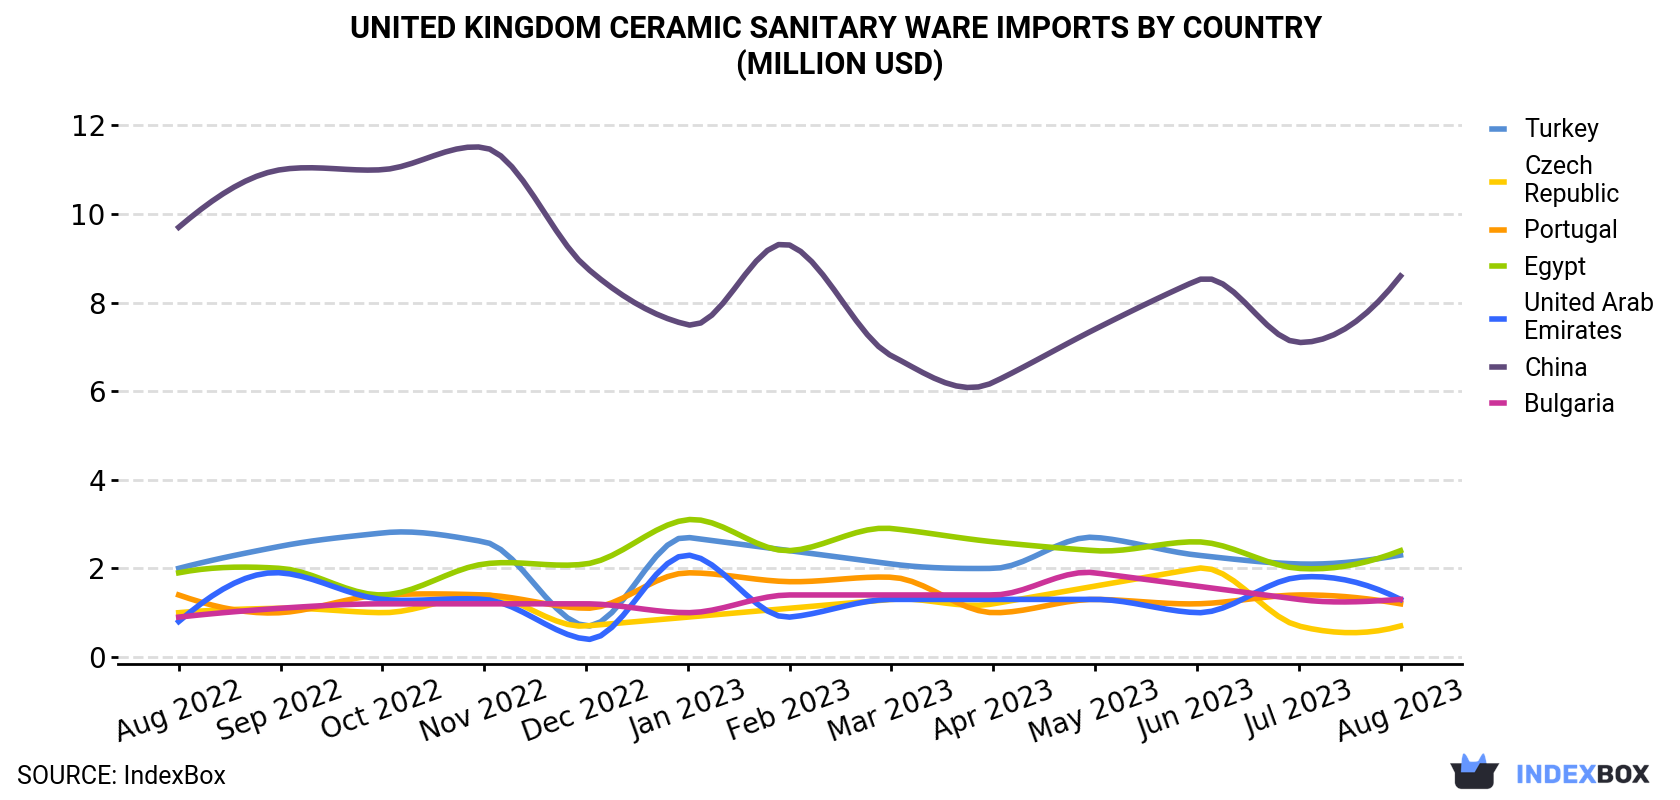 United Kingdom Ceramic Sanitary Ware Imports By Country (Million USD)